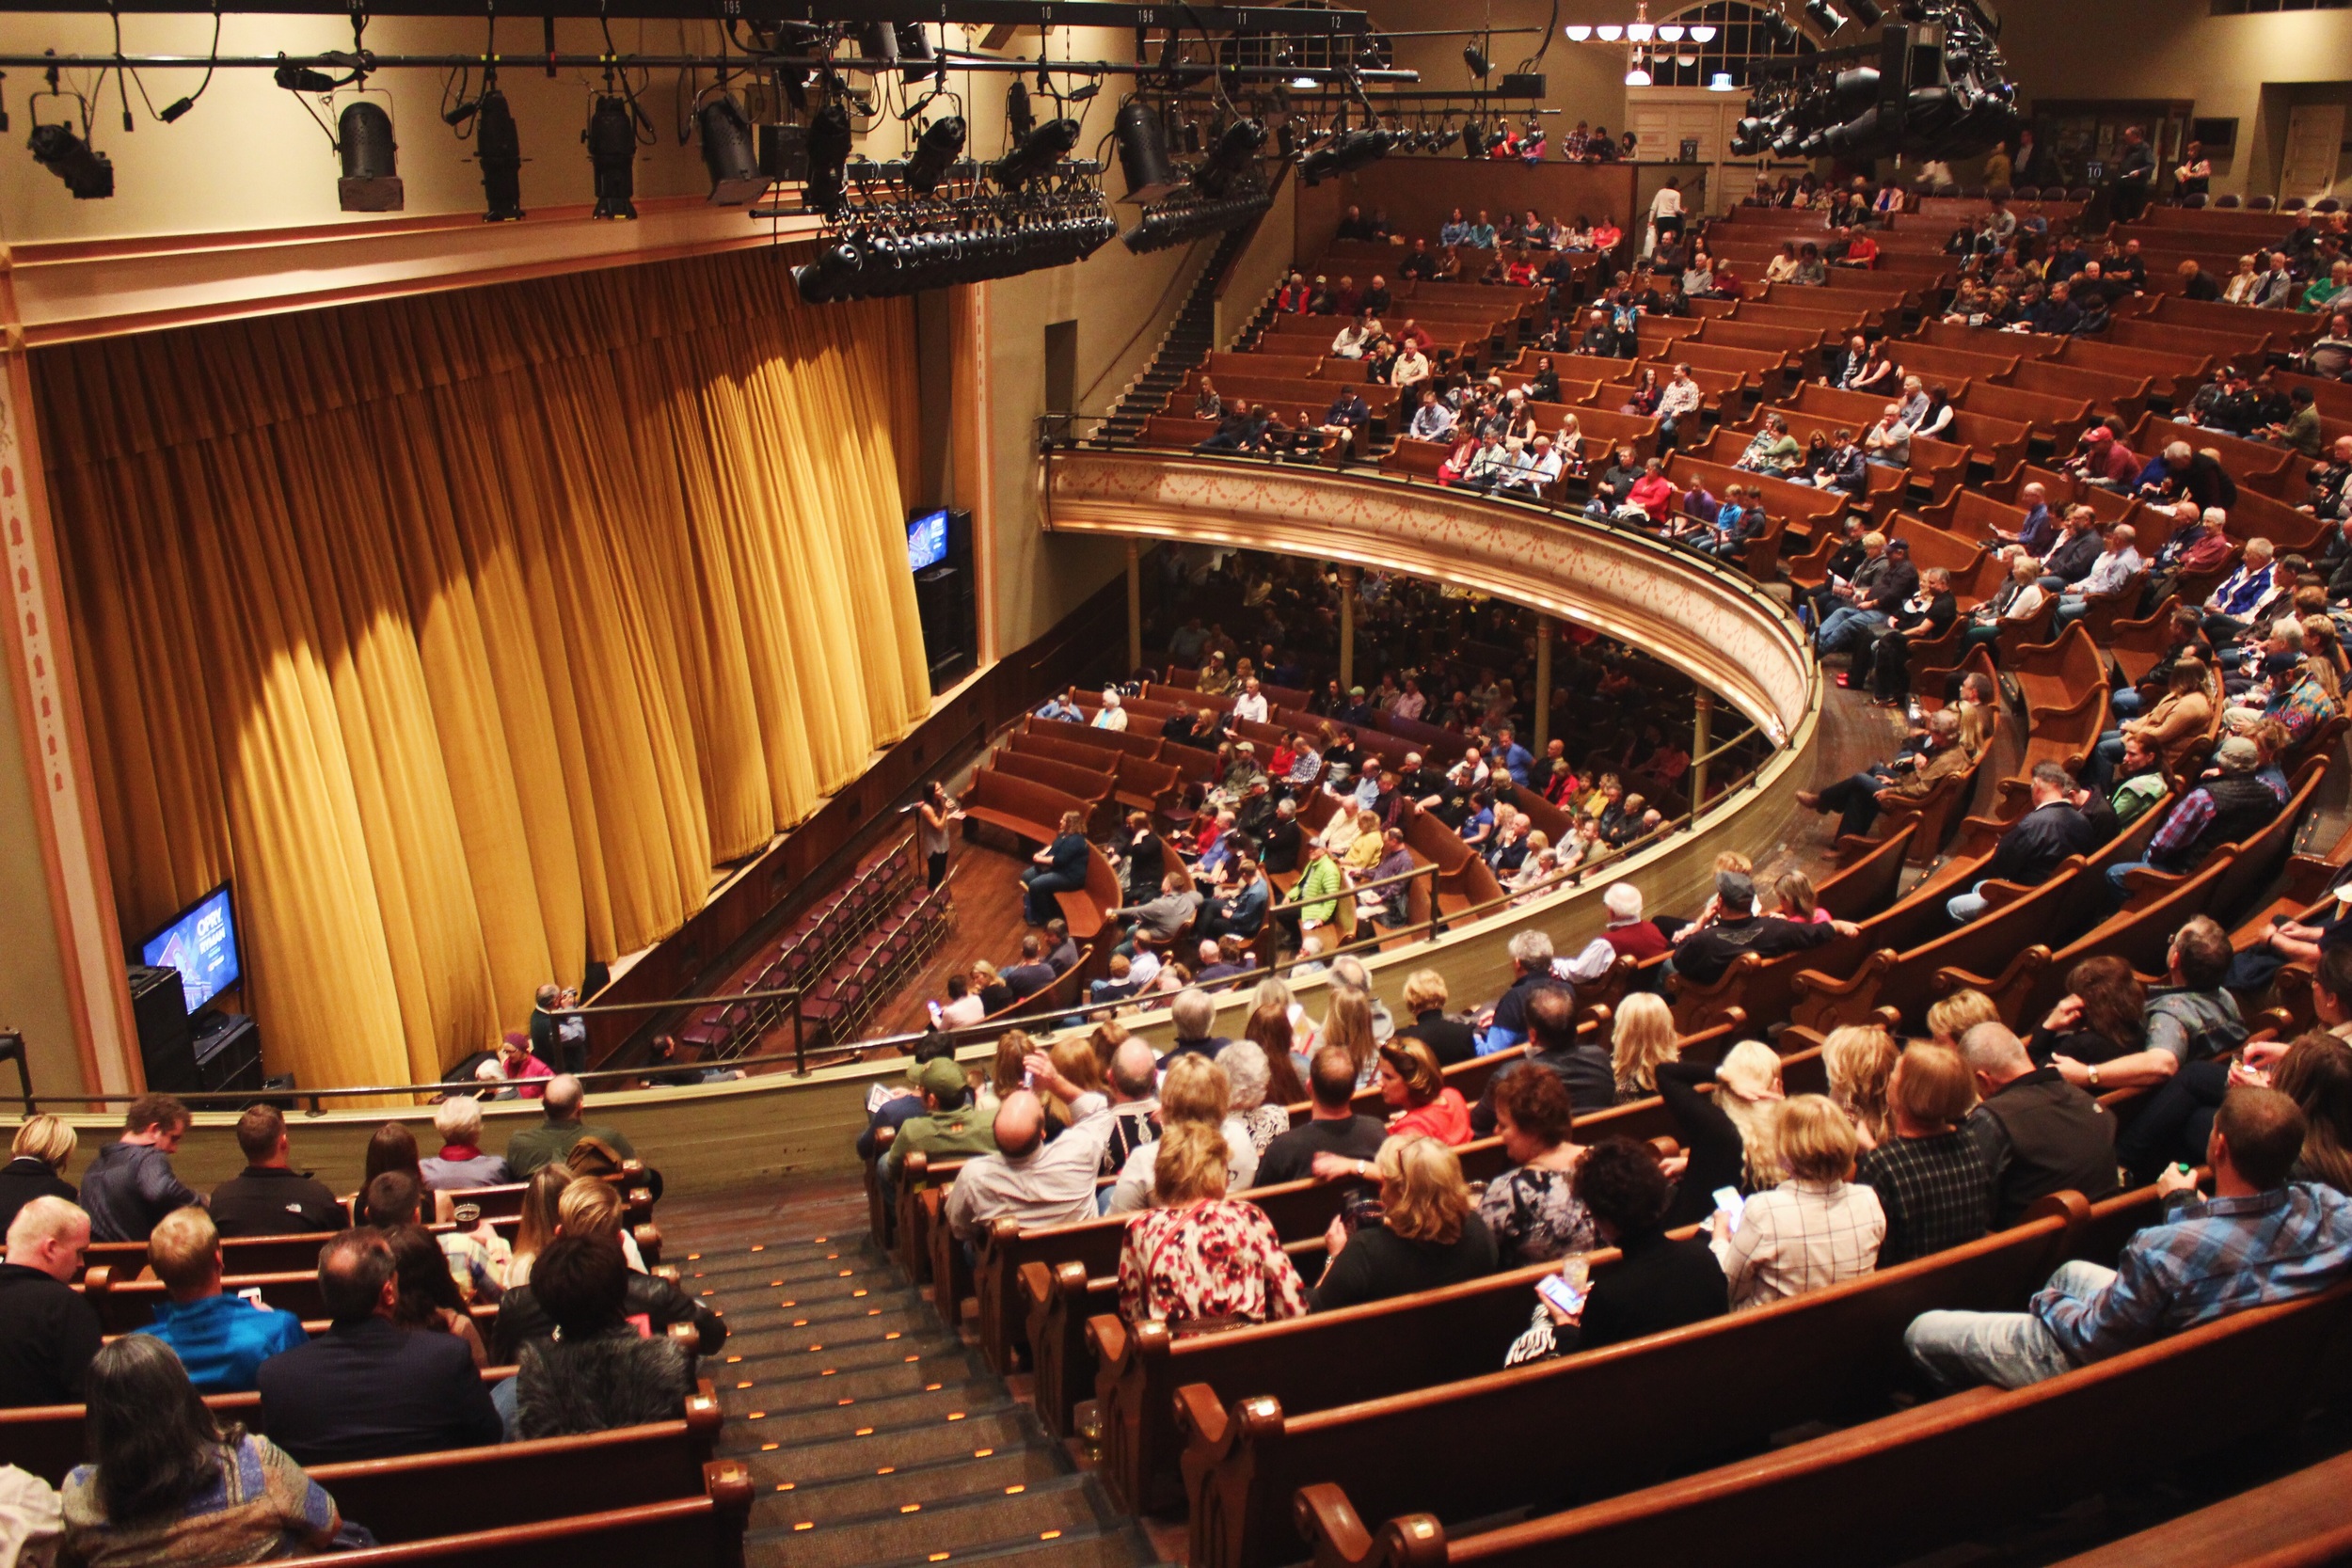 Grand Ole Opry Ryman Auditorium Seating Chart